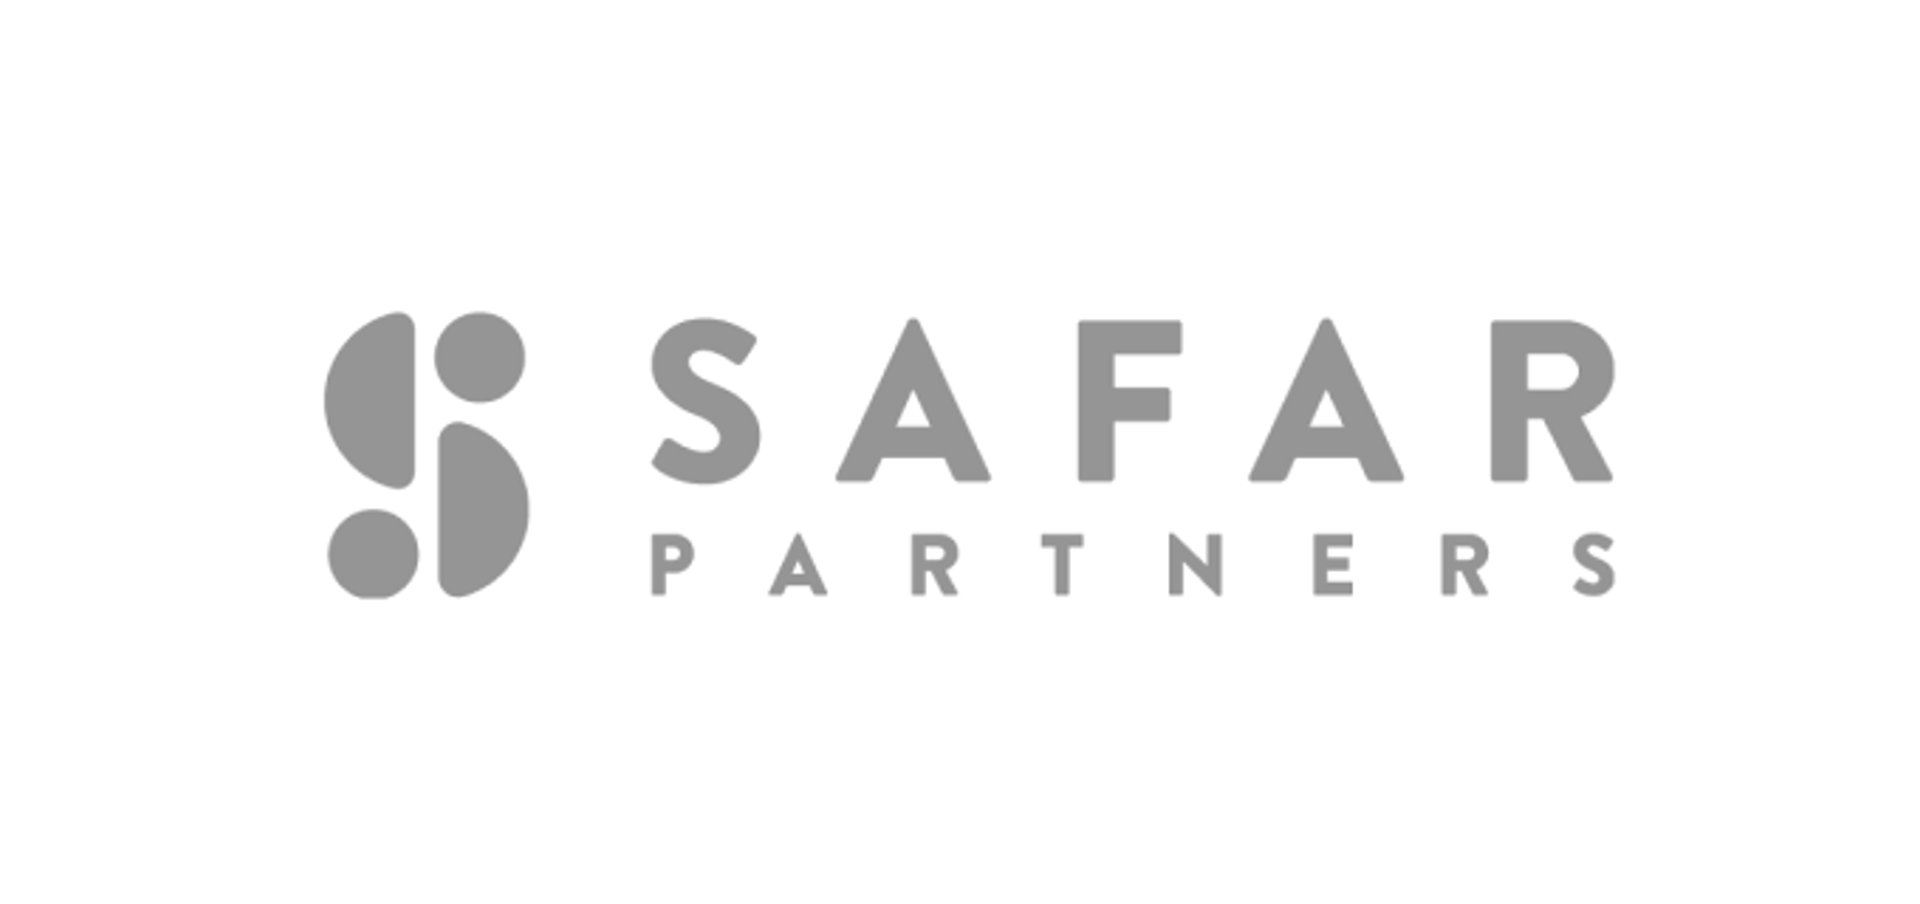 Safar Partners